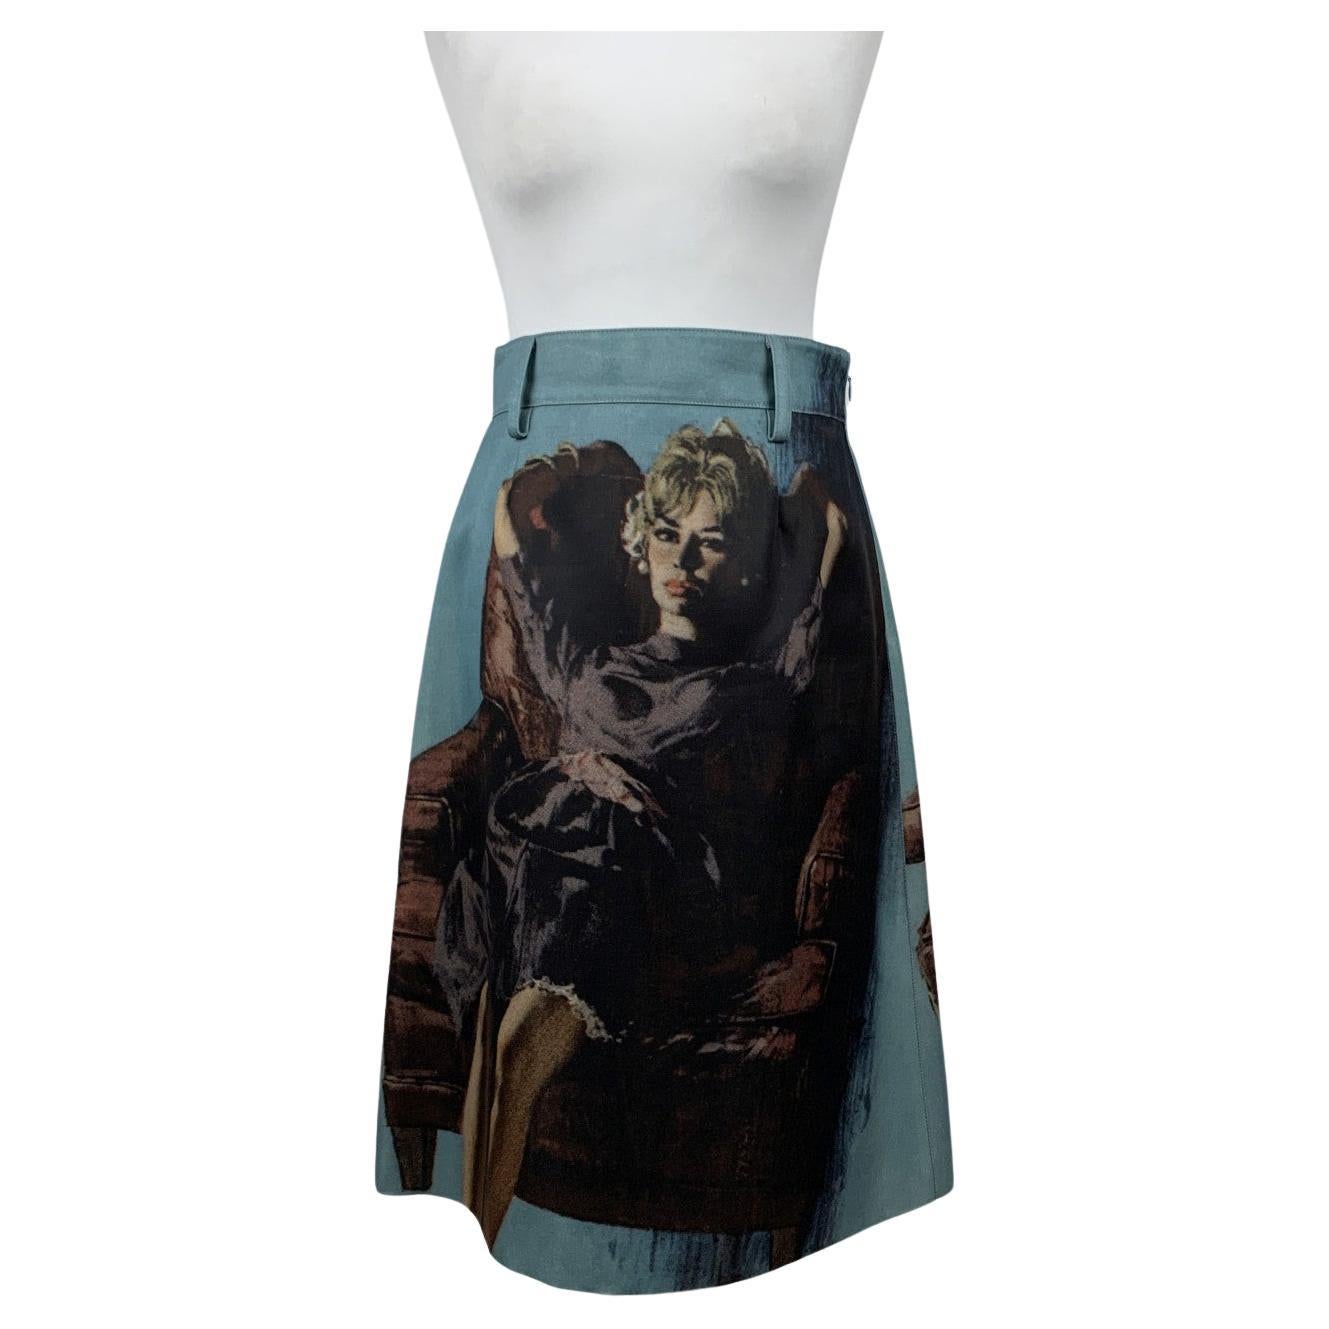 Prada Light Blue Wool Blend Poster Woman Print Midi Skirt Size 38 IT